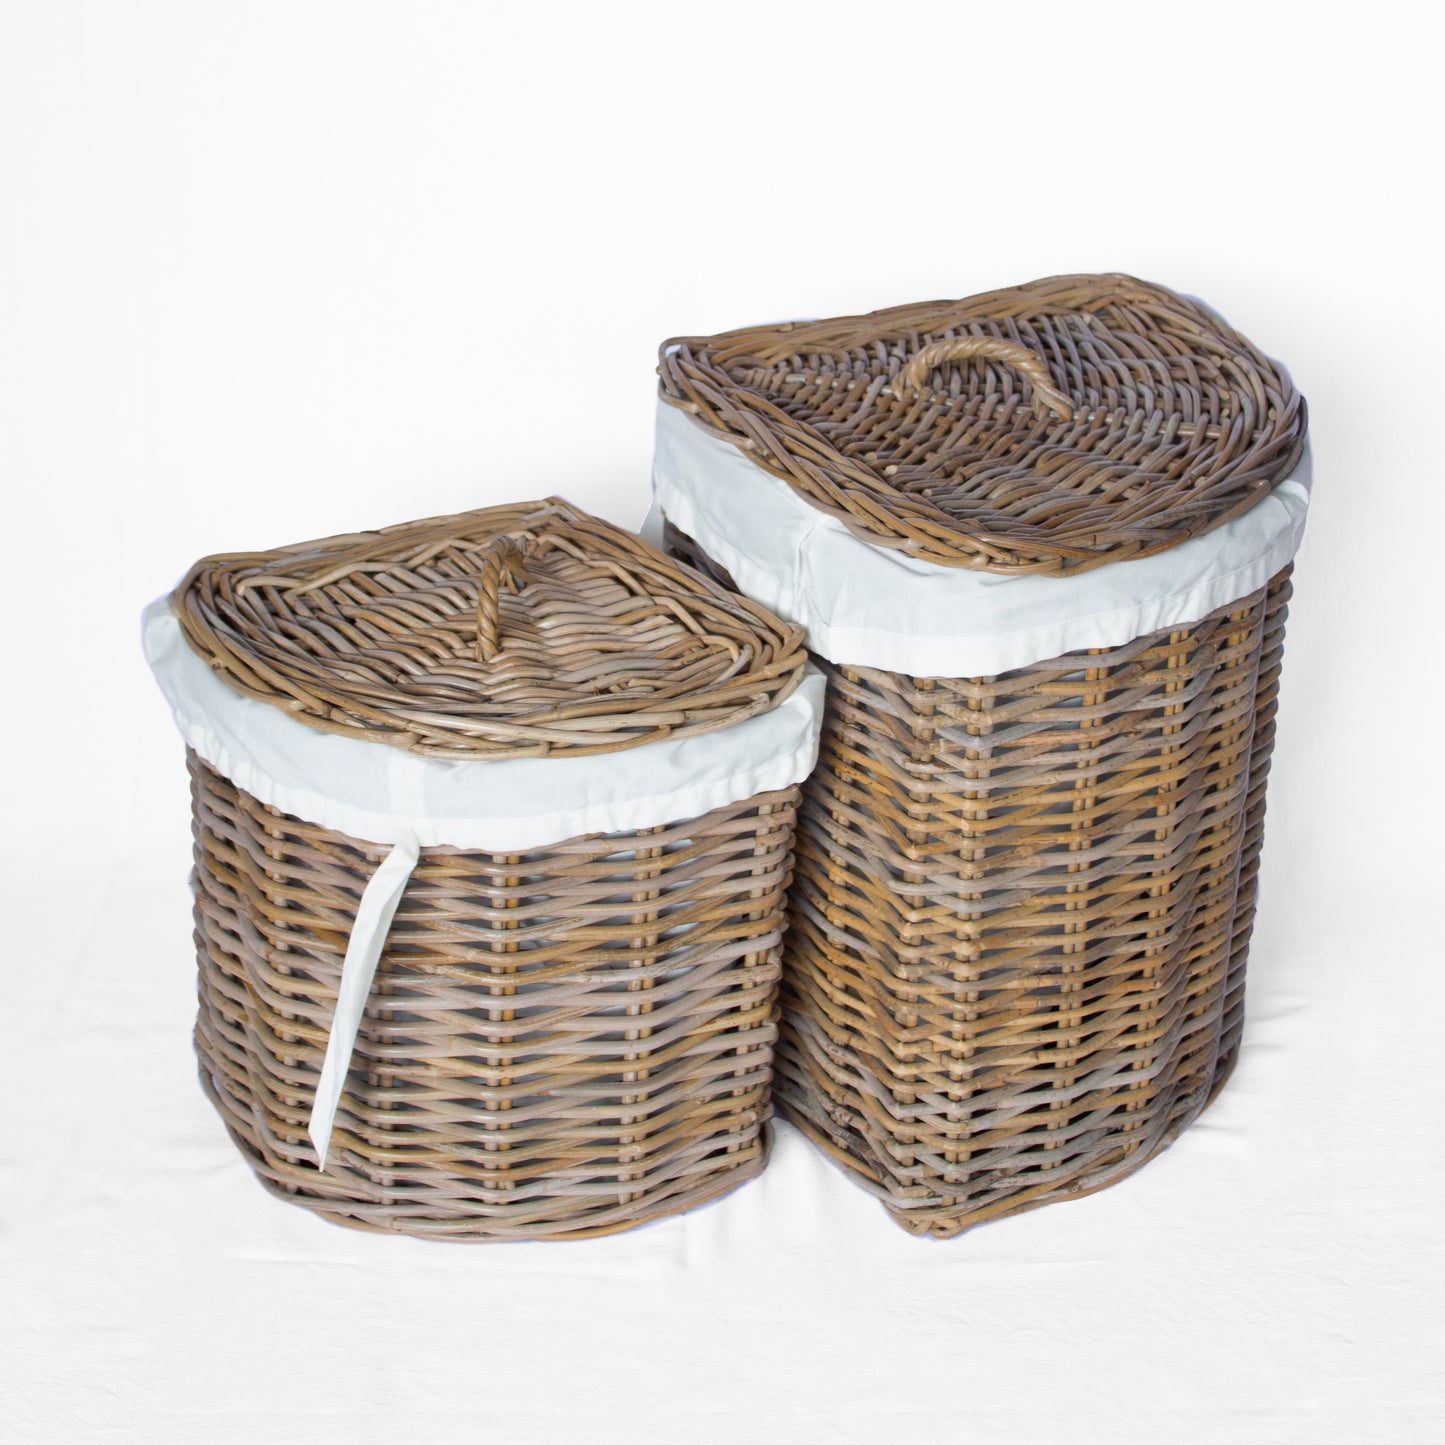 Natural Wicker Corner Laundry Basket